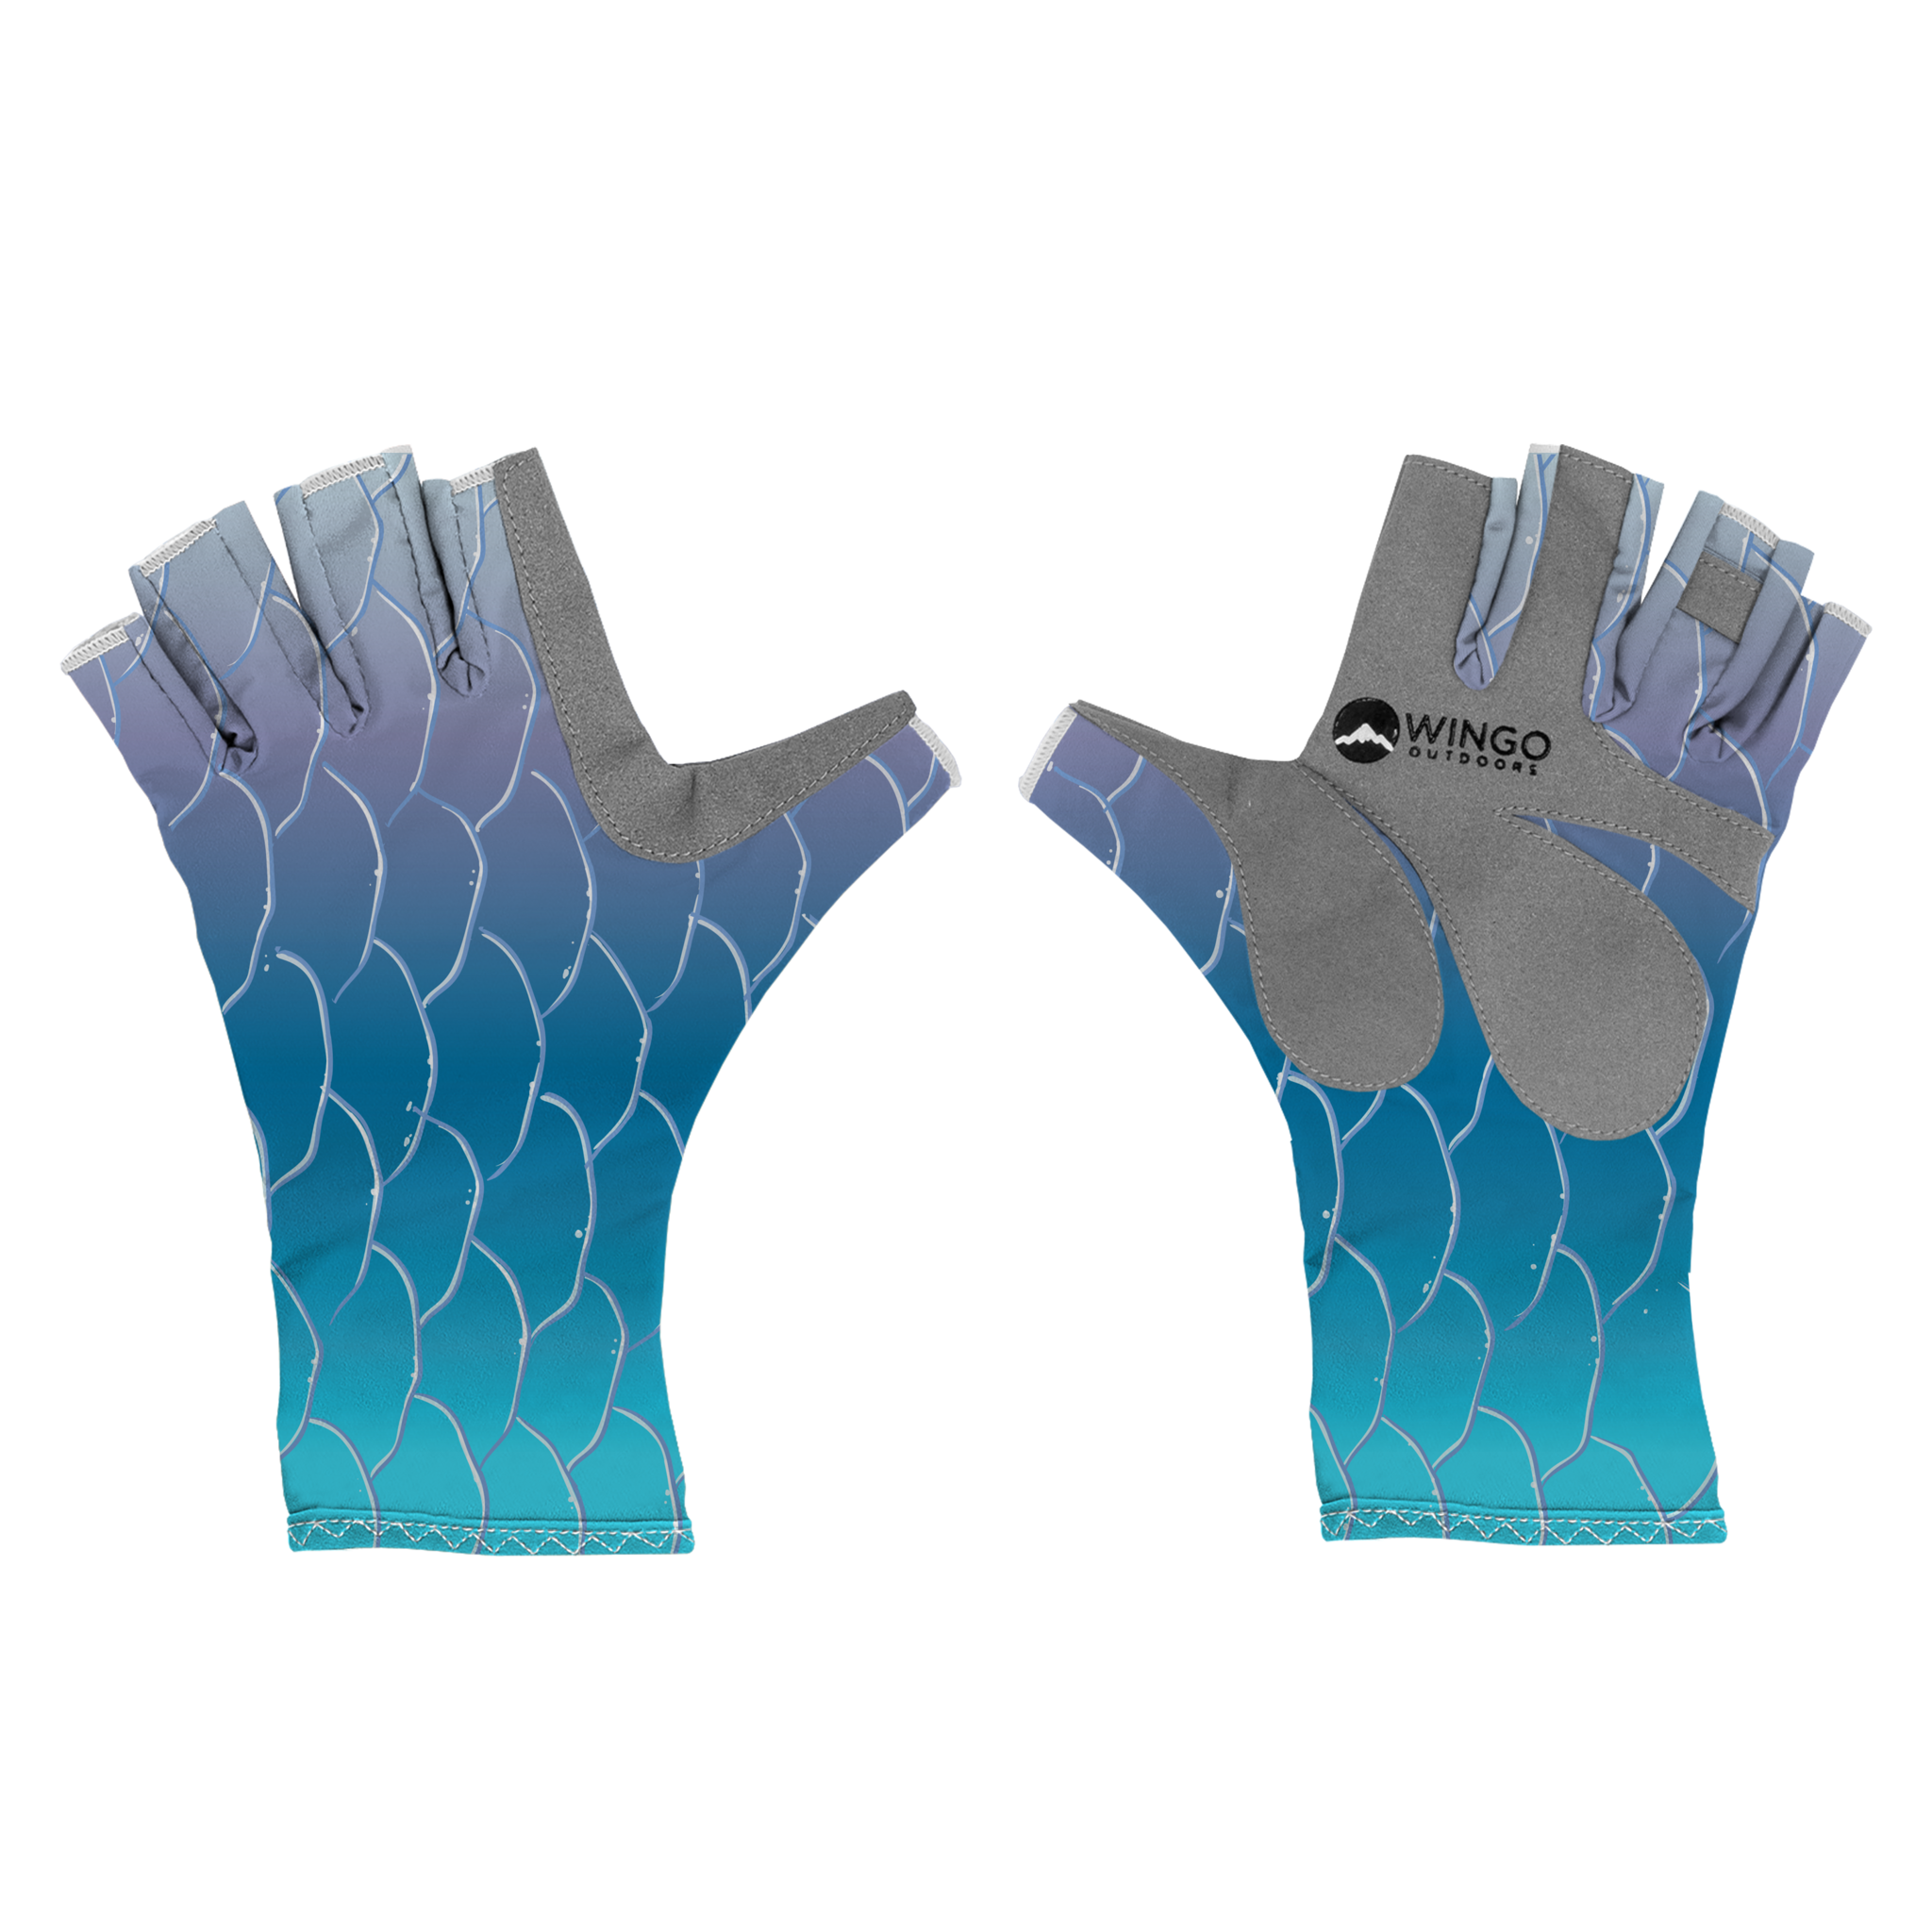 BUFF Unisex Solar Gloves, Lightweight Protective Gloves